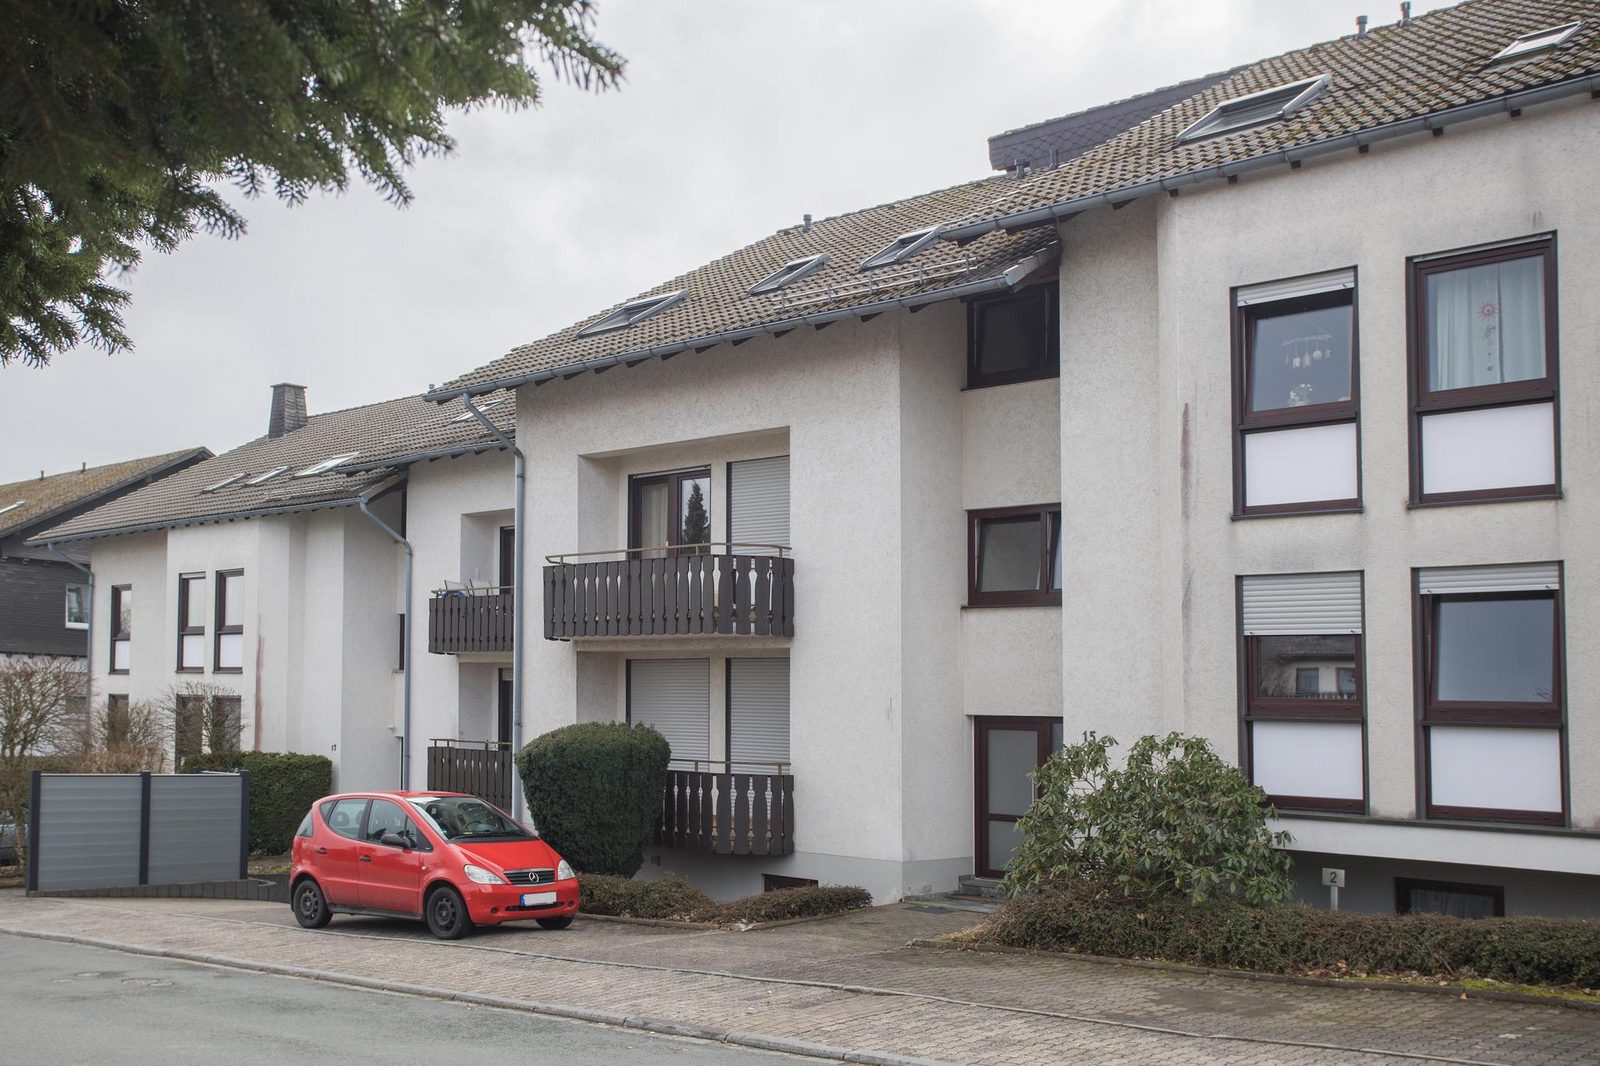 Apartment - Hackeschladenweg 15 | Winterberg 'Auszeit Winterberg'